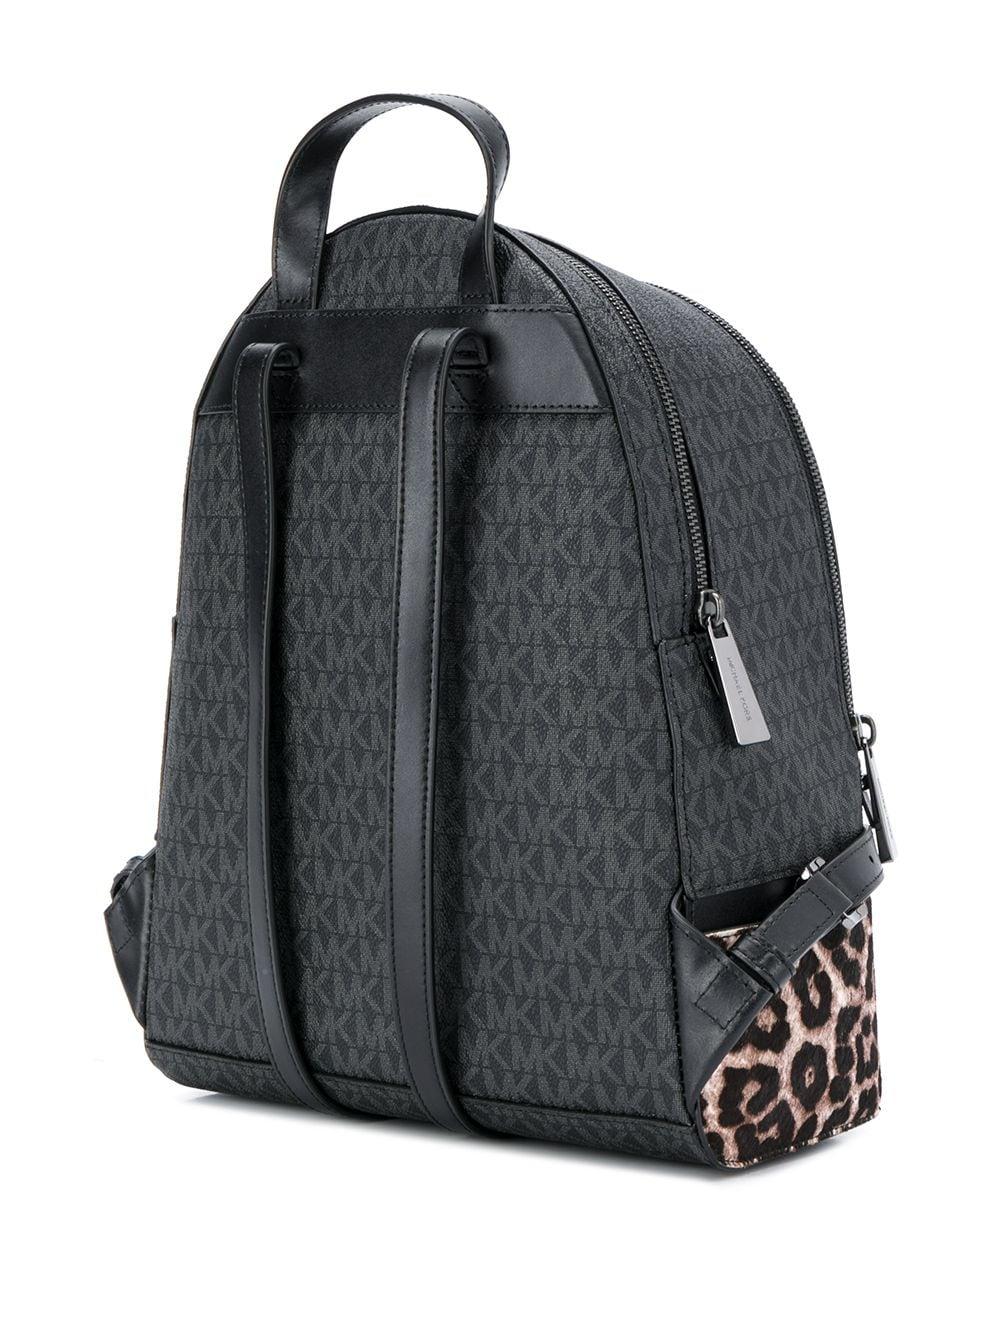 Mila Small Leopard Print Calf Hair Shoulder Bag | Michael Kors